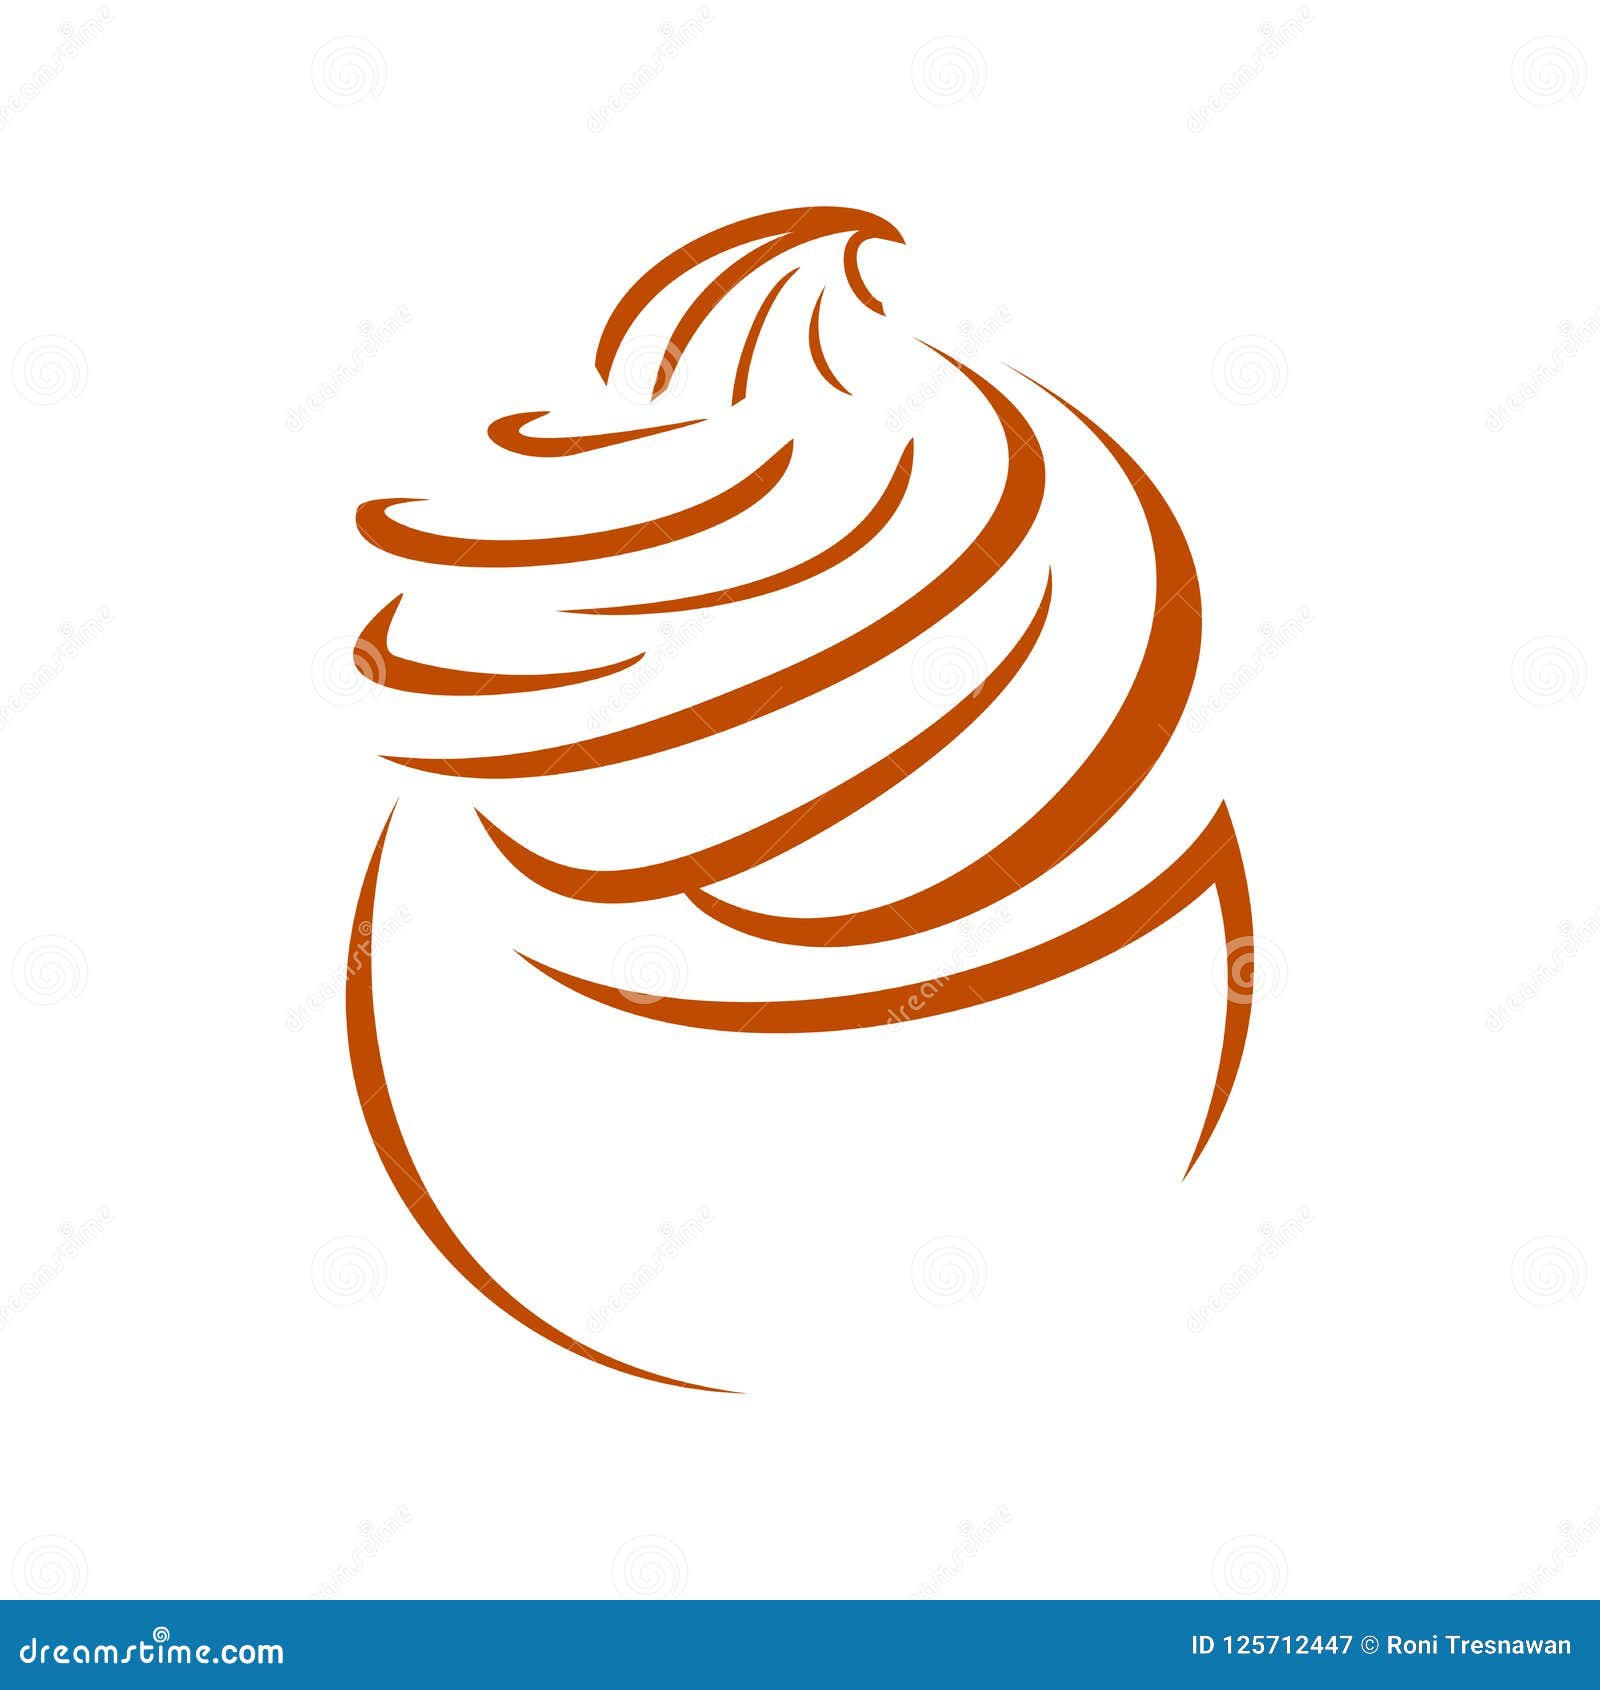 Cupcake Line Art Whip Cream Symbol Design Stock Vector - Illustration ...